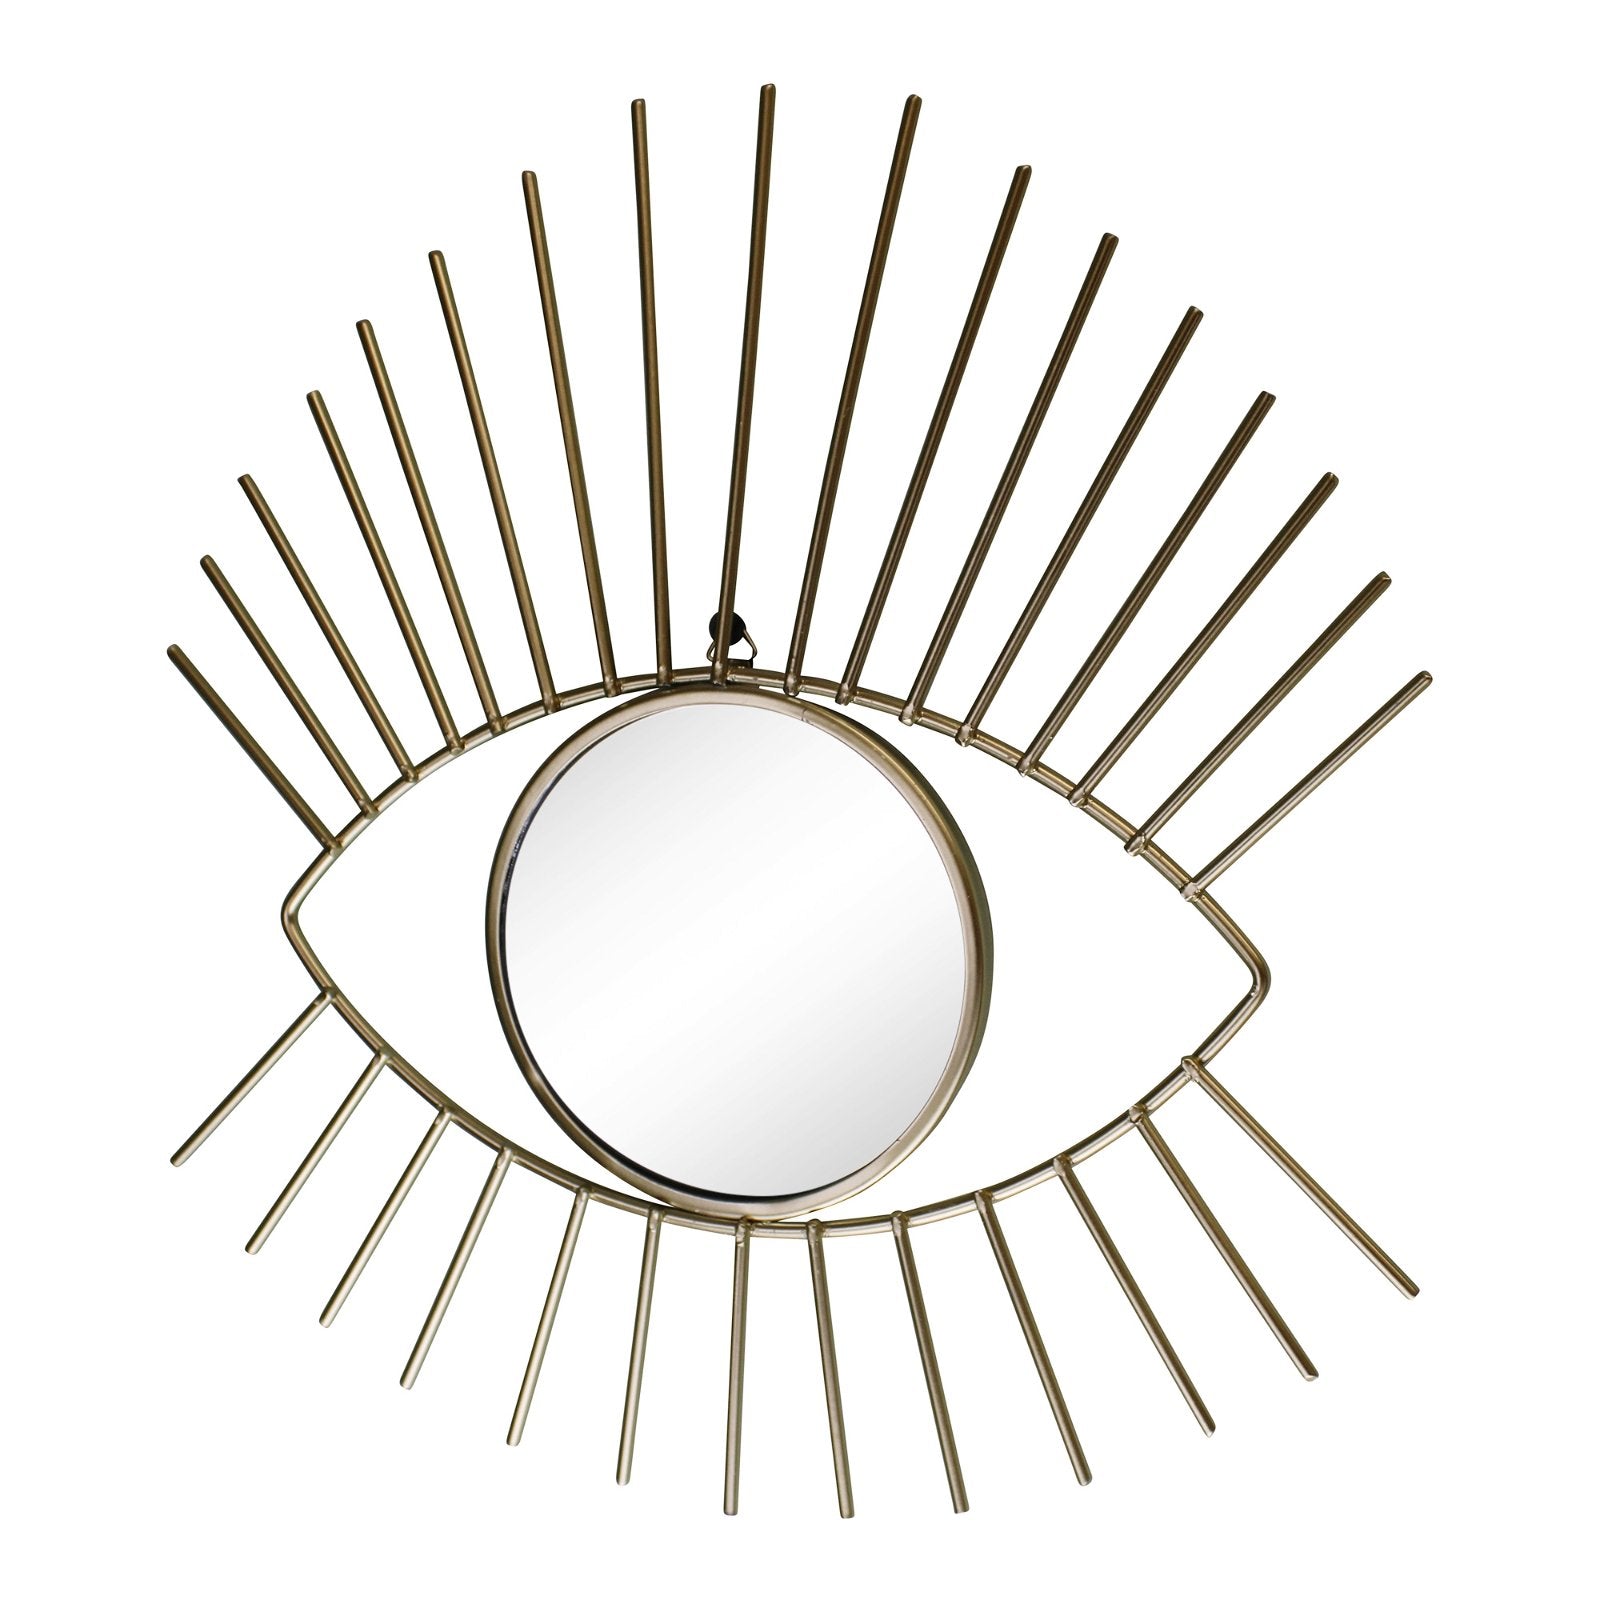 Gold Metal Eyelash Accent Mirror